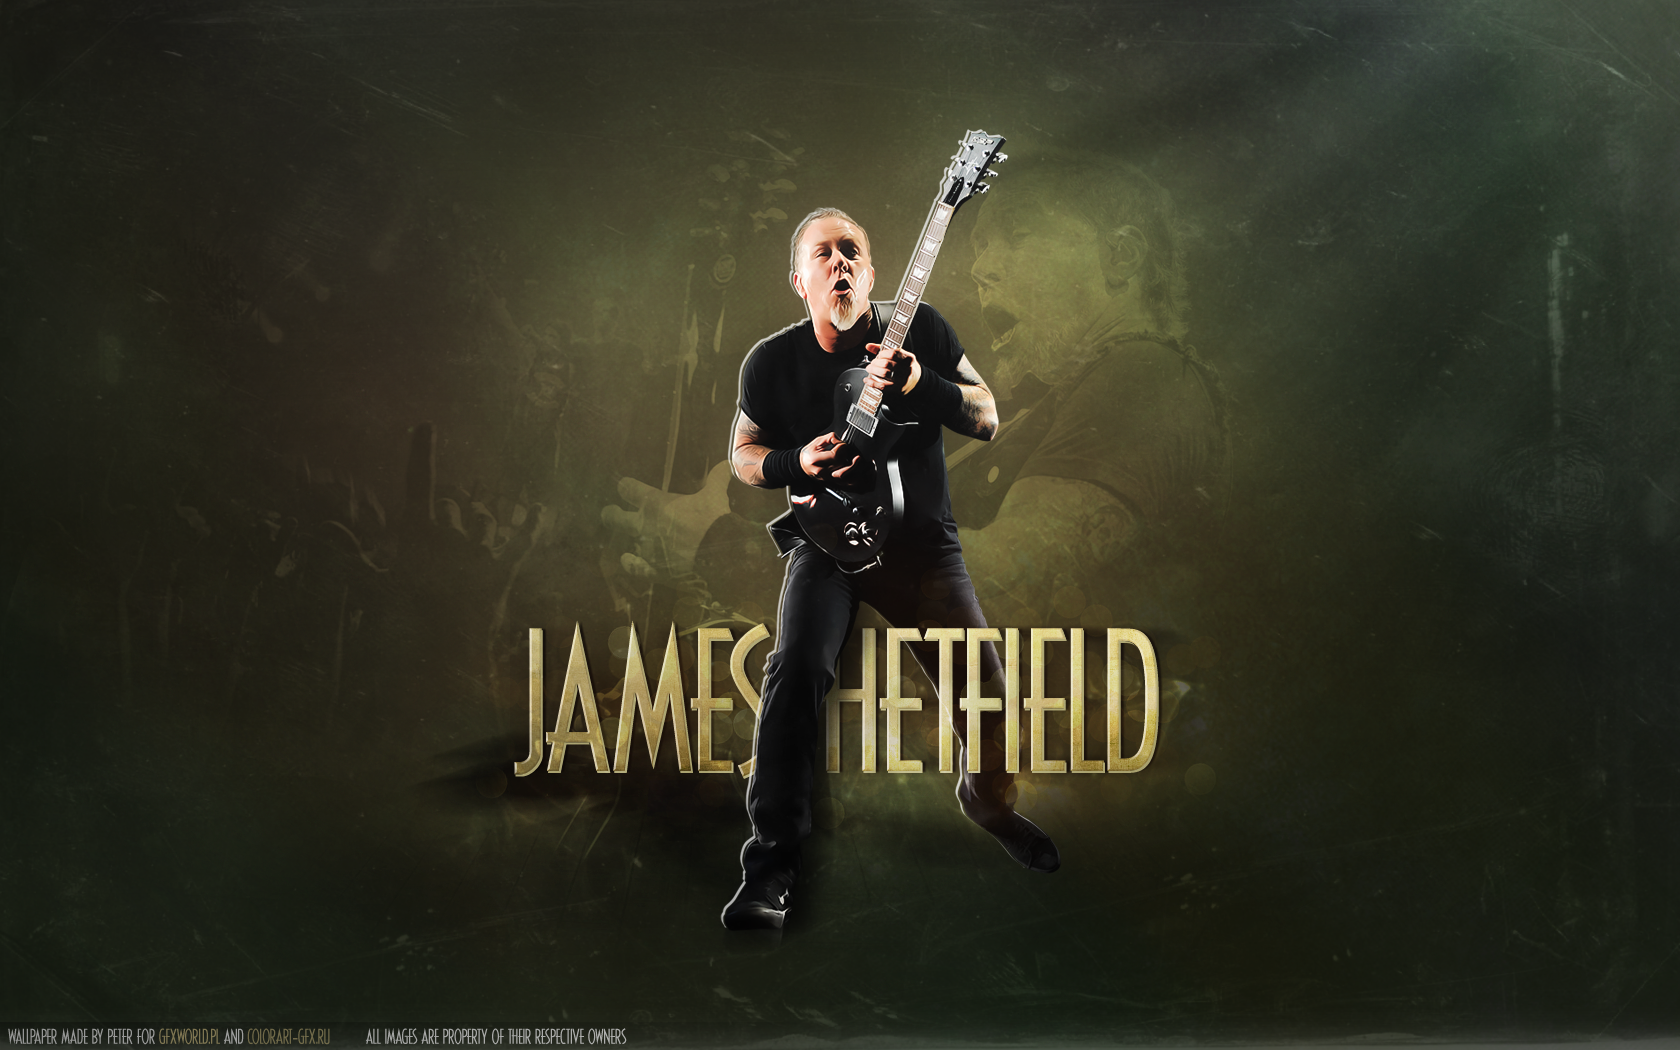 James Hetfield Wallpaper by peter0512 on